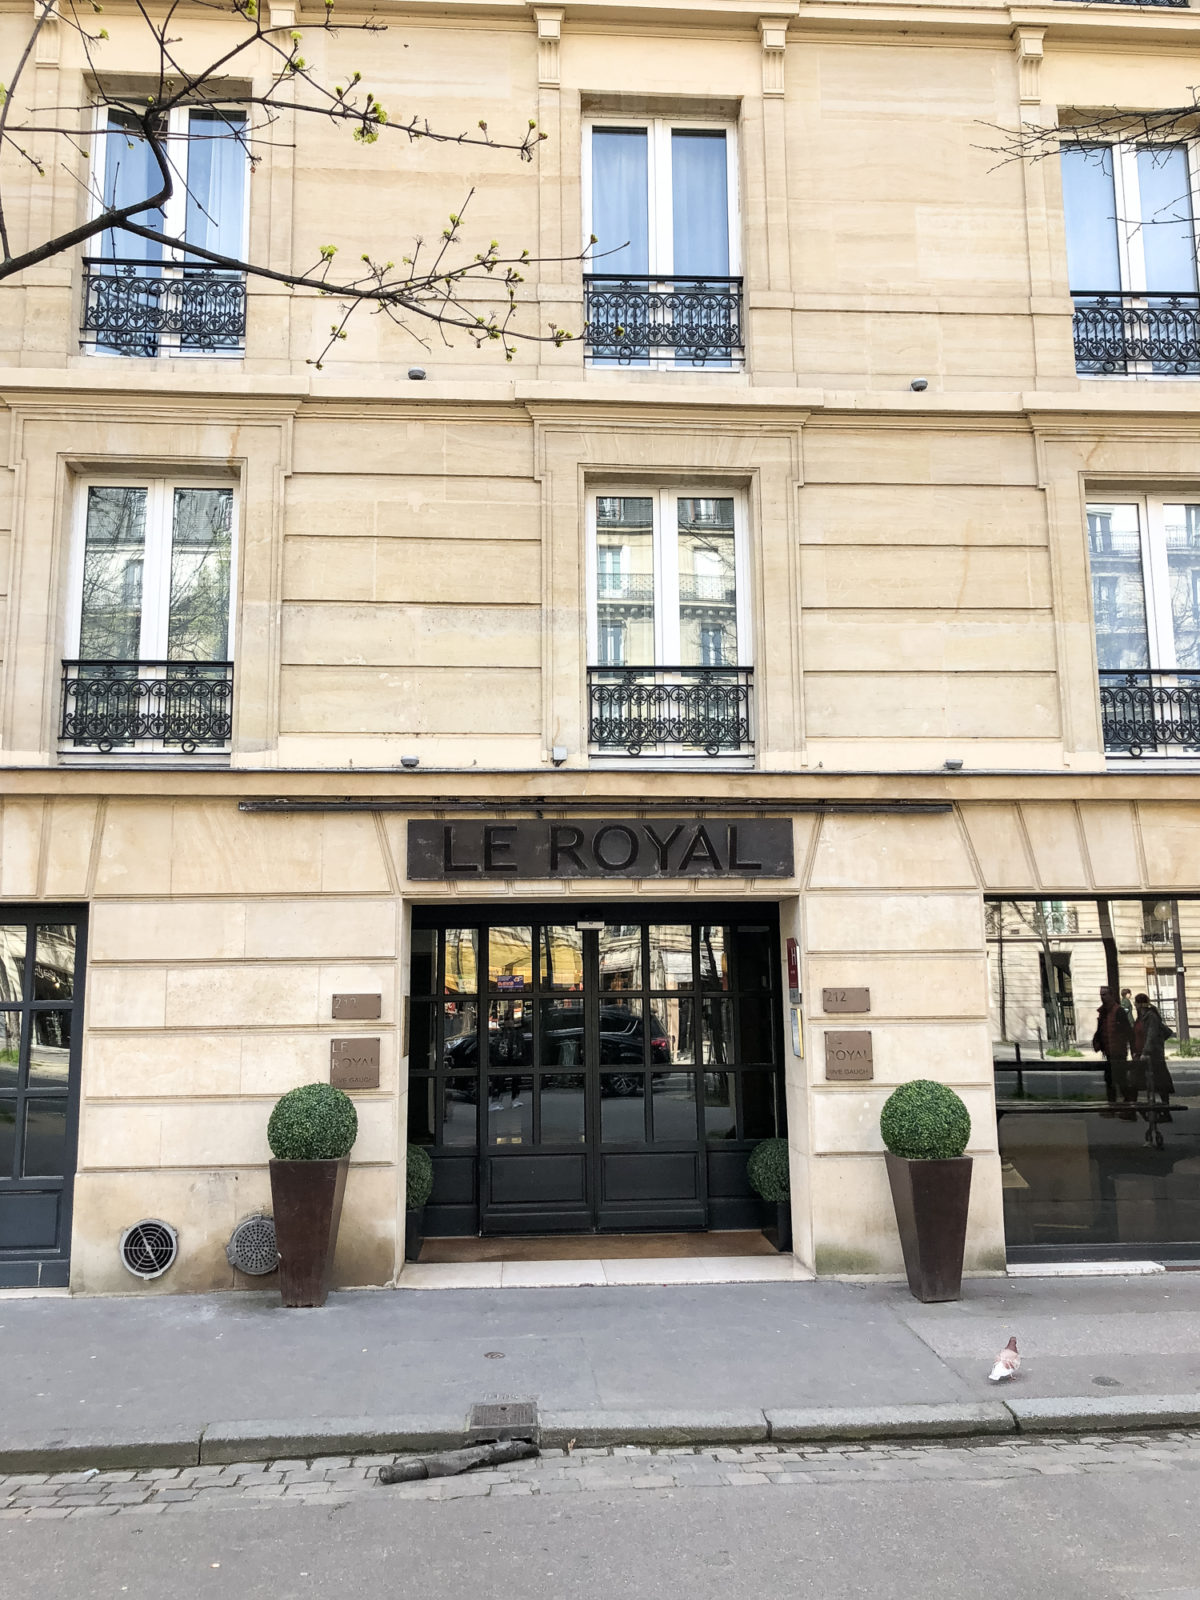 Le Royal Hotel on Raspail Boulevard in Paris France